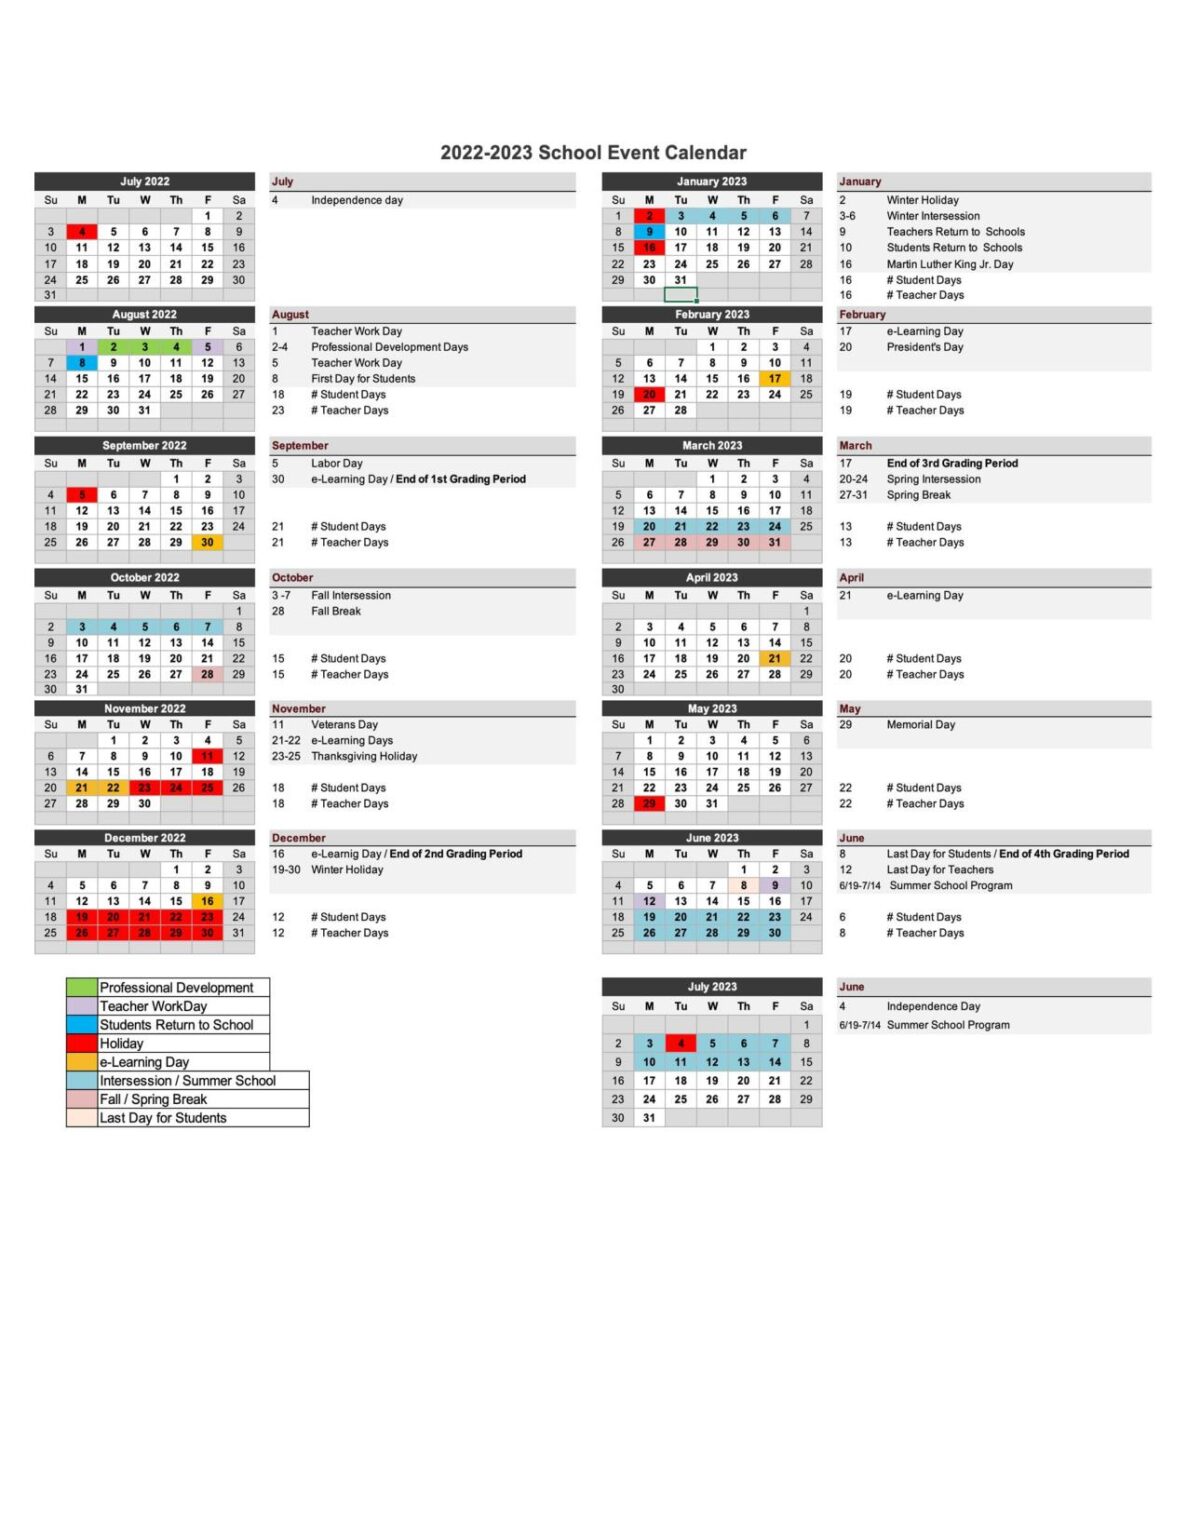 birmingham-city-schools-calendar-2022-2023-in-pdf